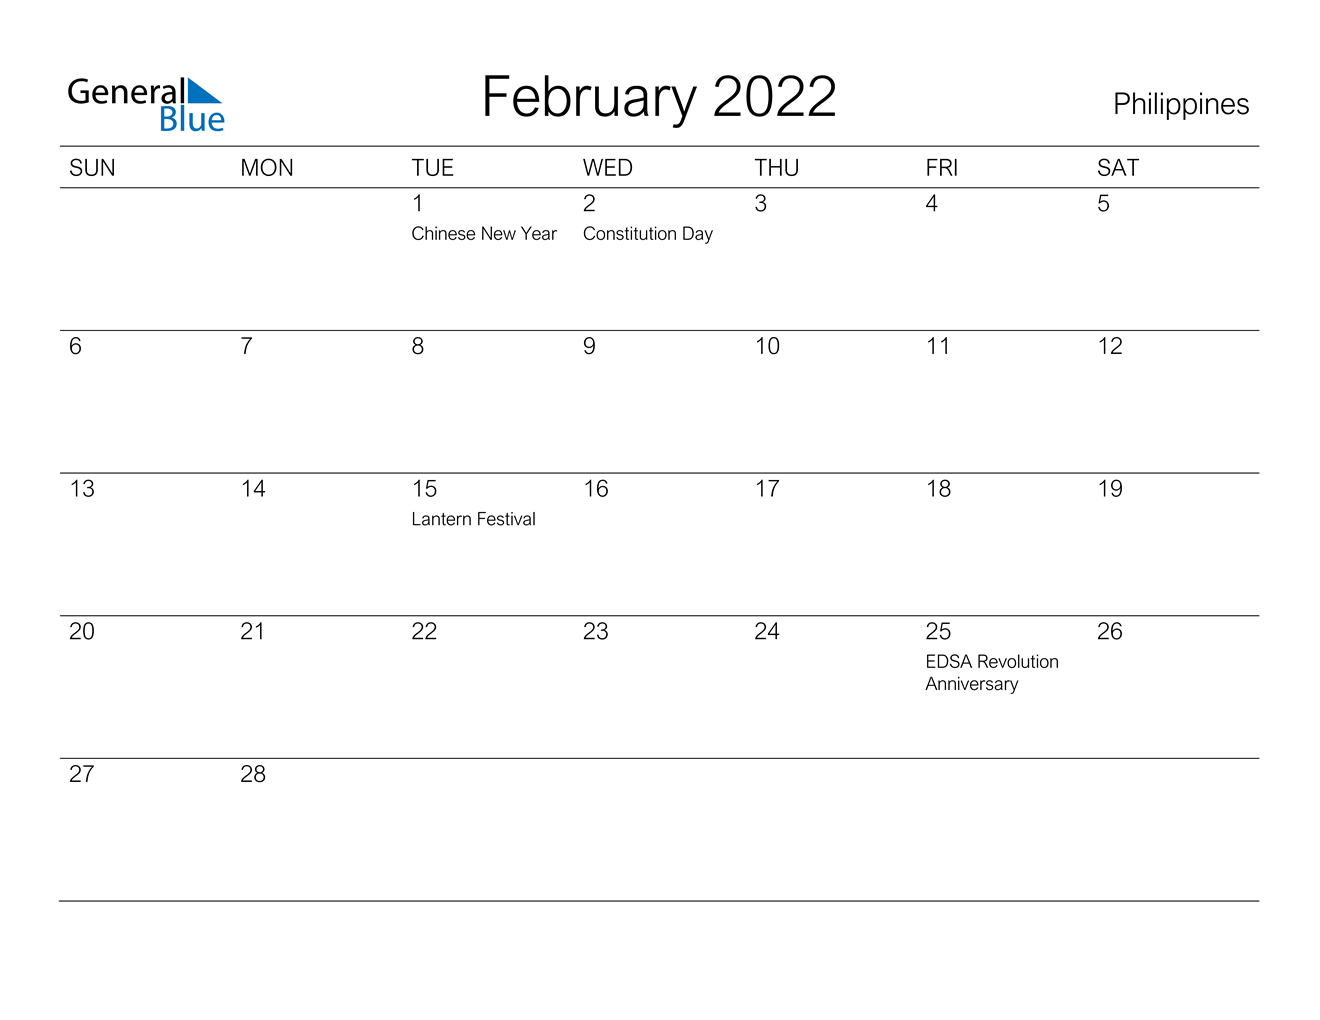 February 2022 Calendar - Philippines